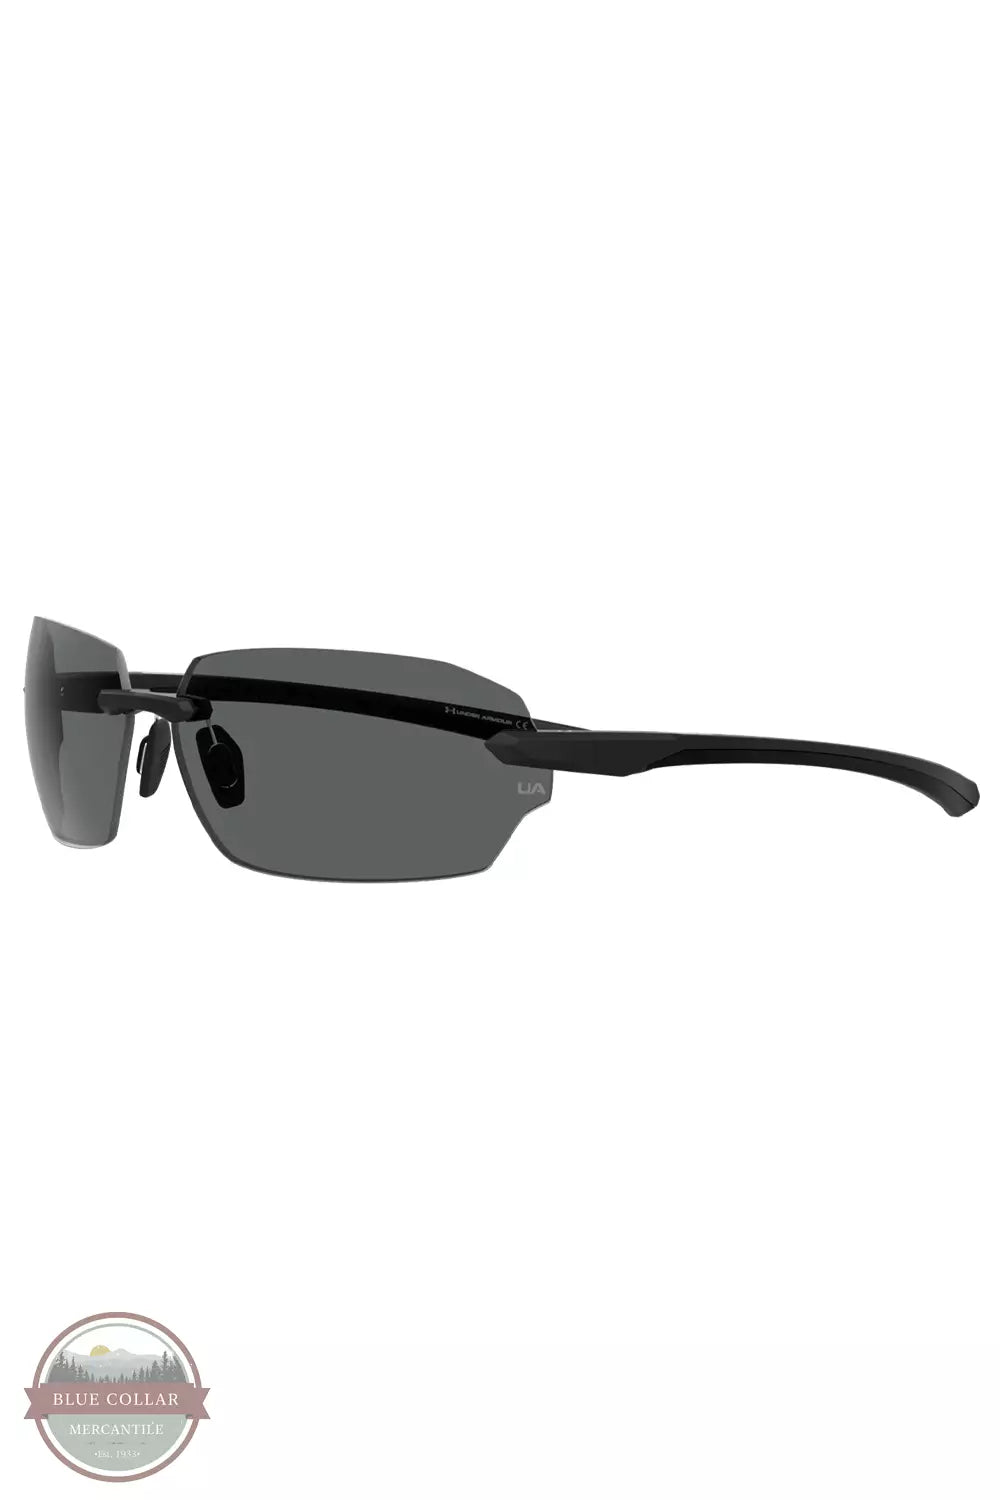 Under Armour 1378136-883 Fire 2 Sunglasses in Matte Black / Ruthenium Profile View